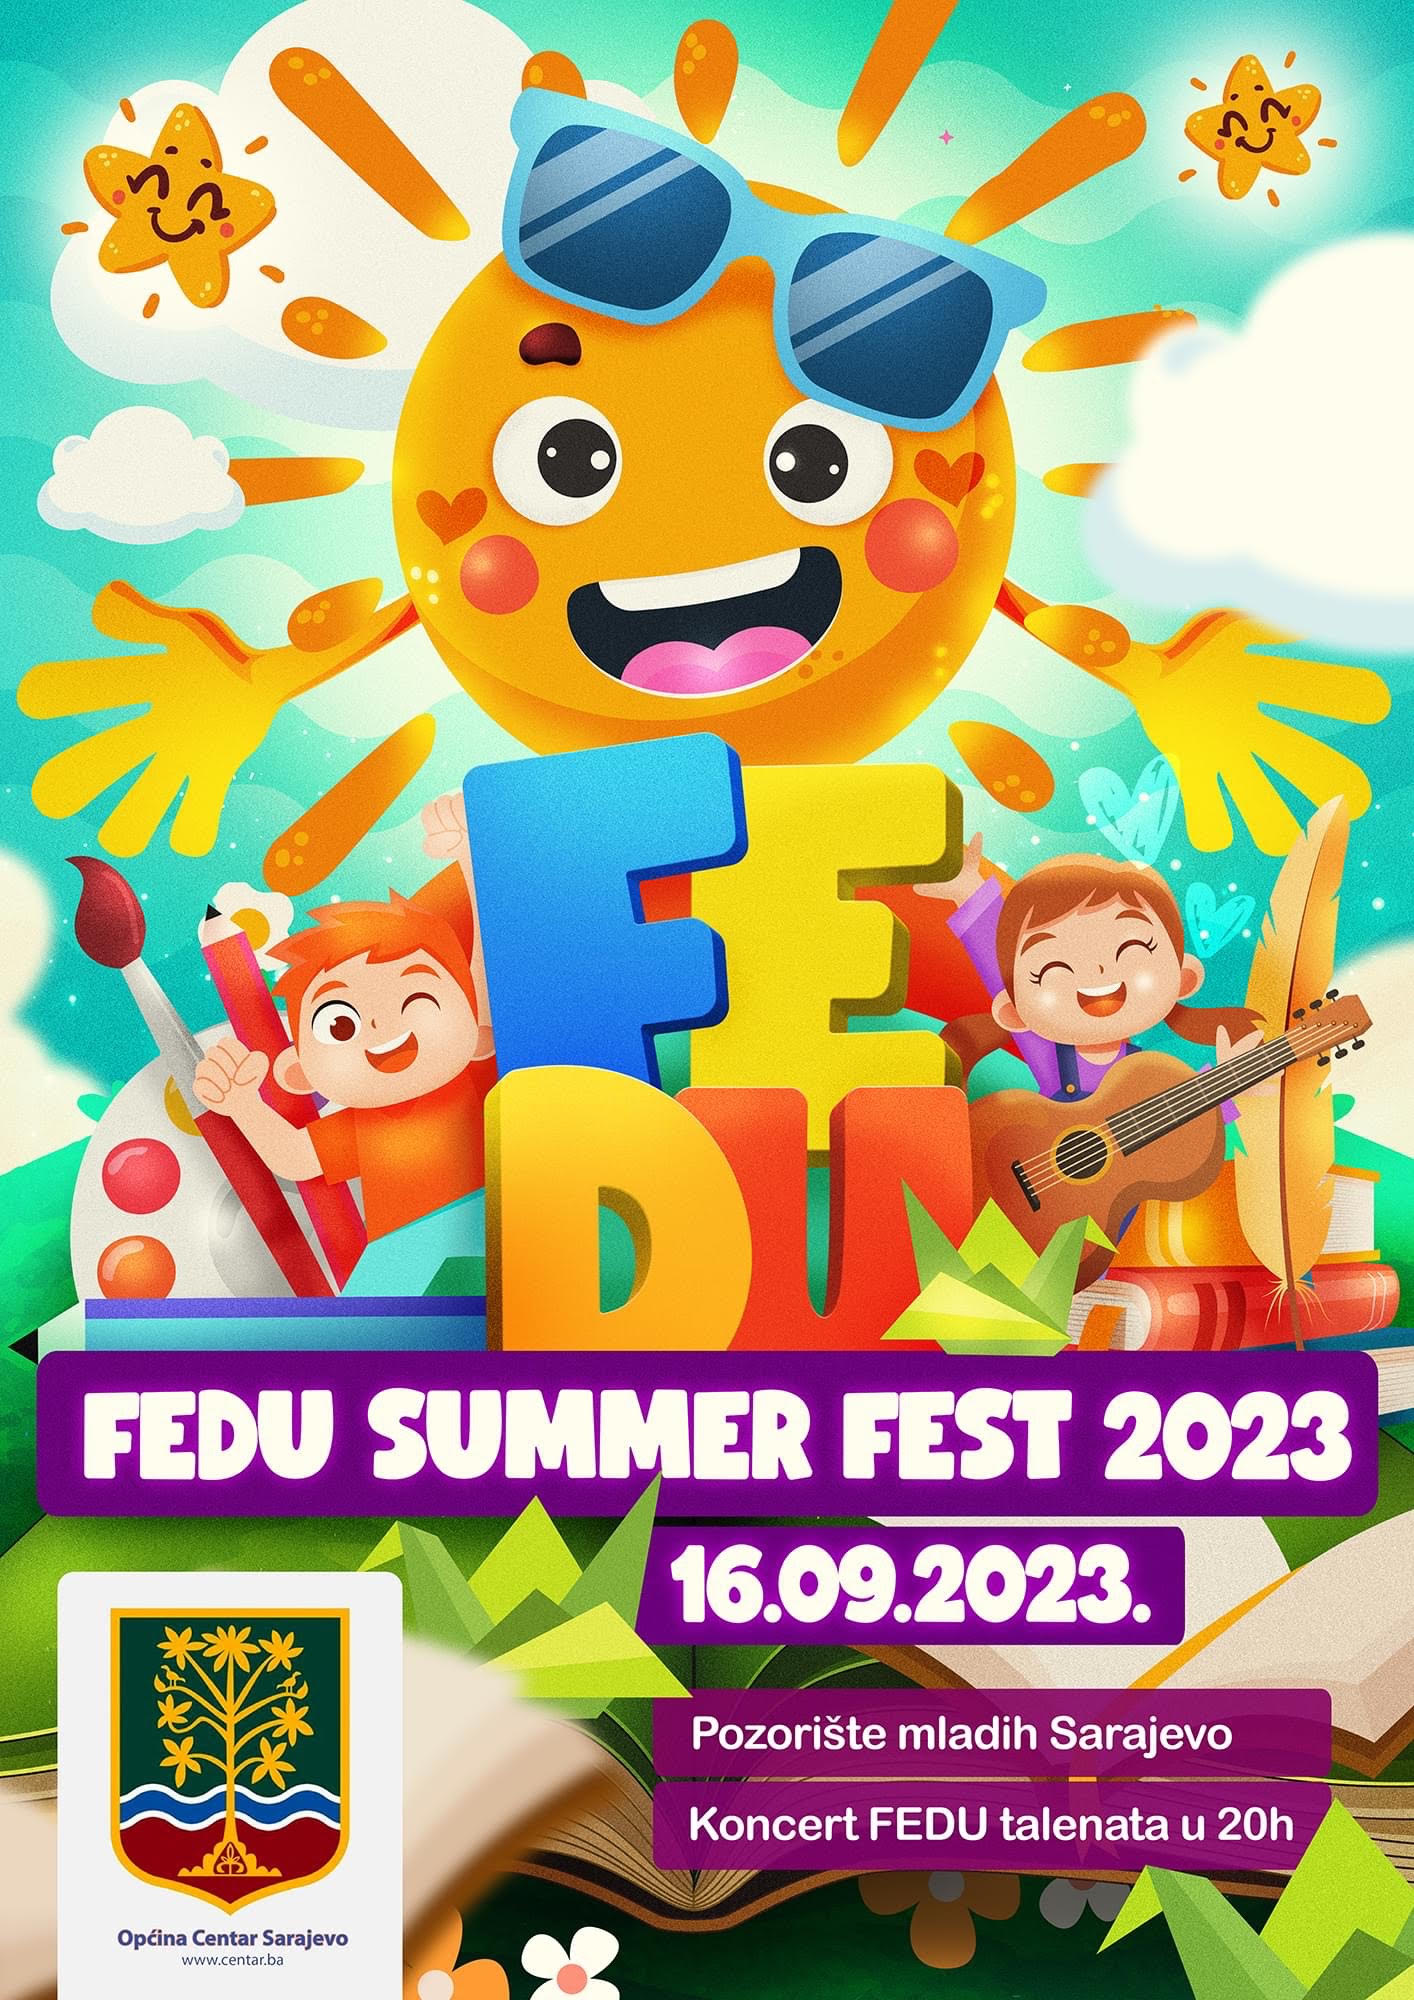 FEDU SUMMER FEST 2023